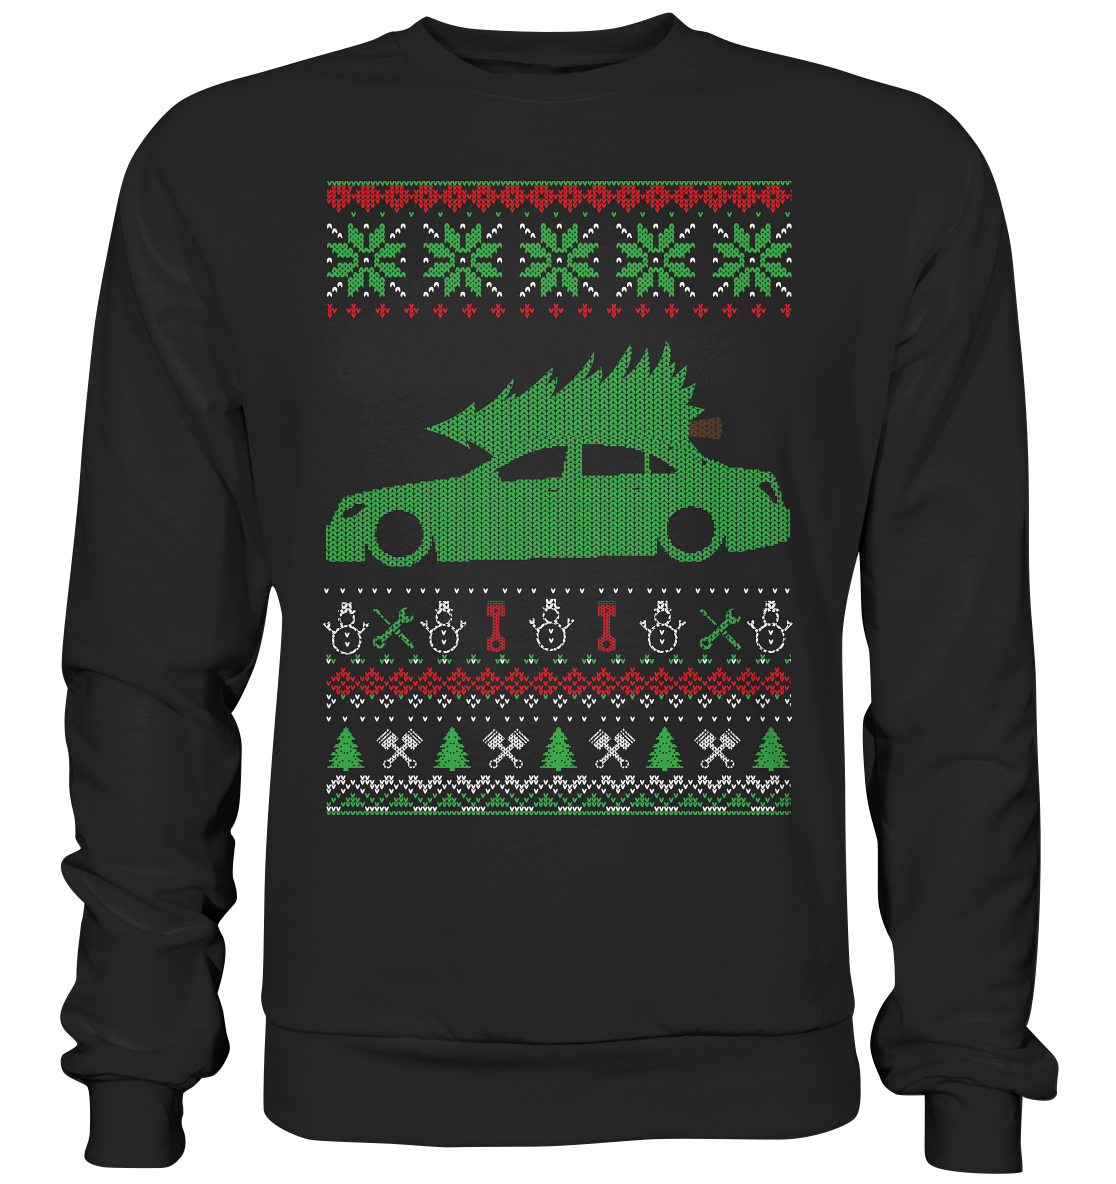 CODUGLY_MGKW221 - Premium Sweatshirt